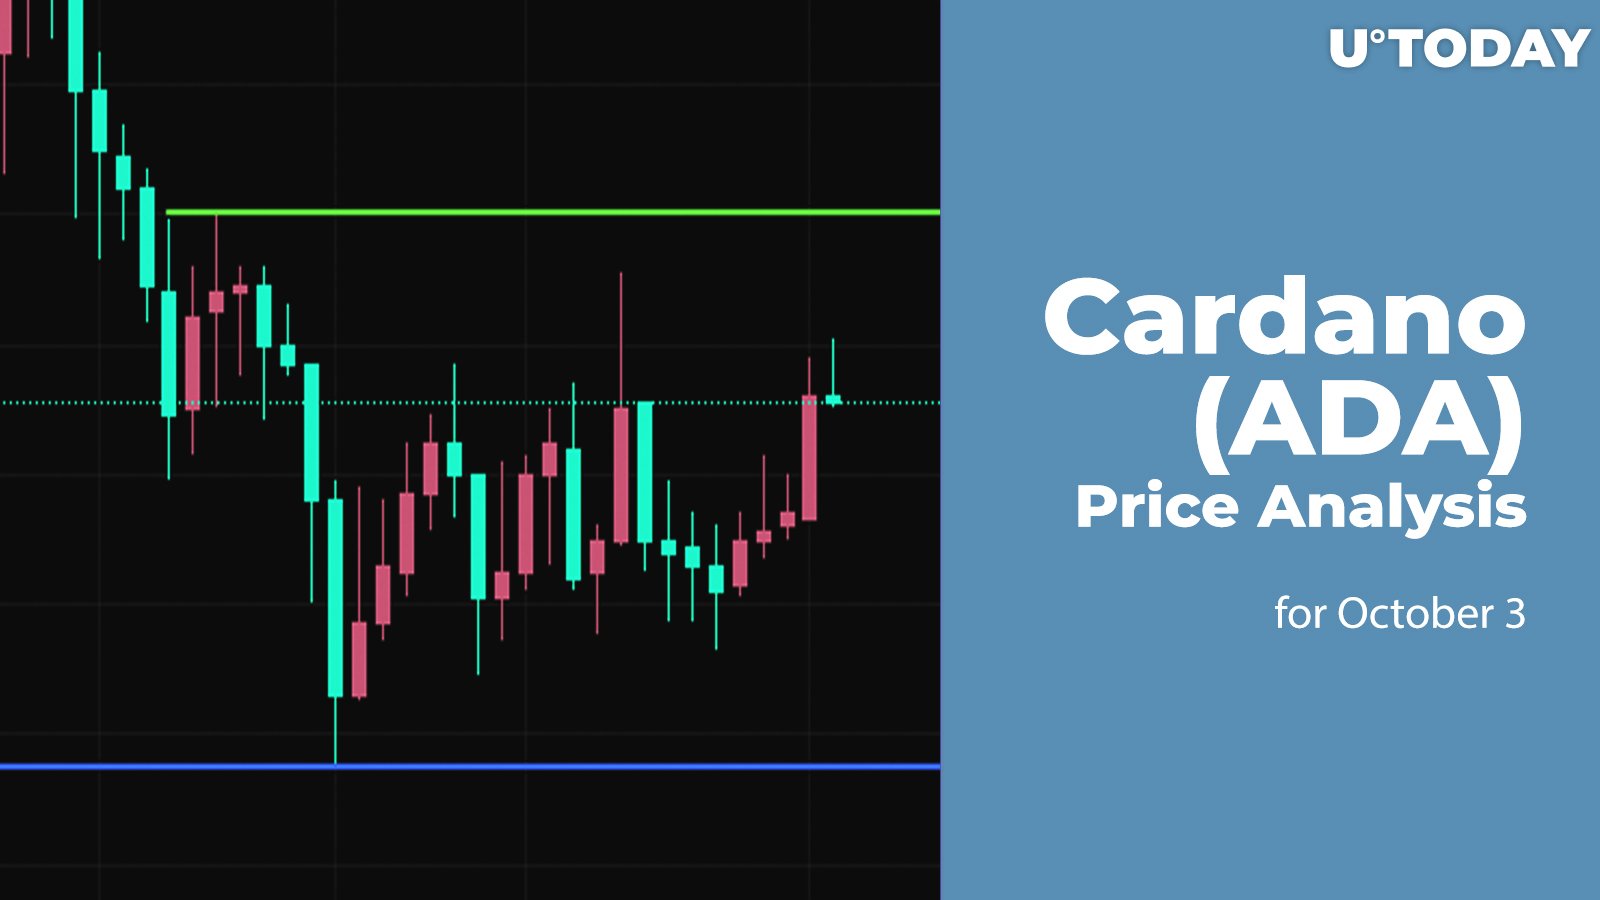 Cardano (ADA) Price Analysis for October 3